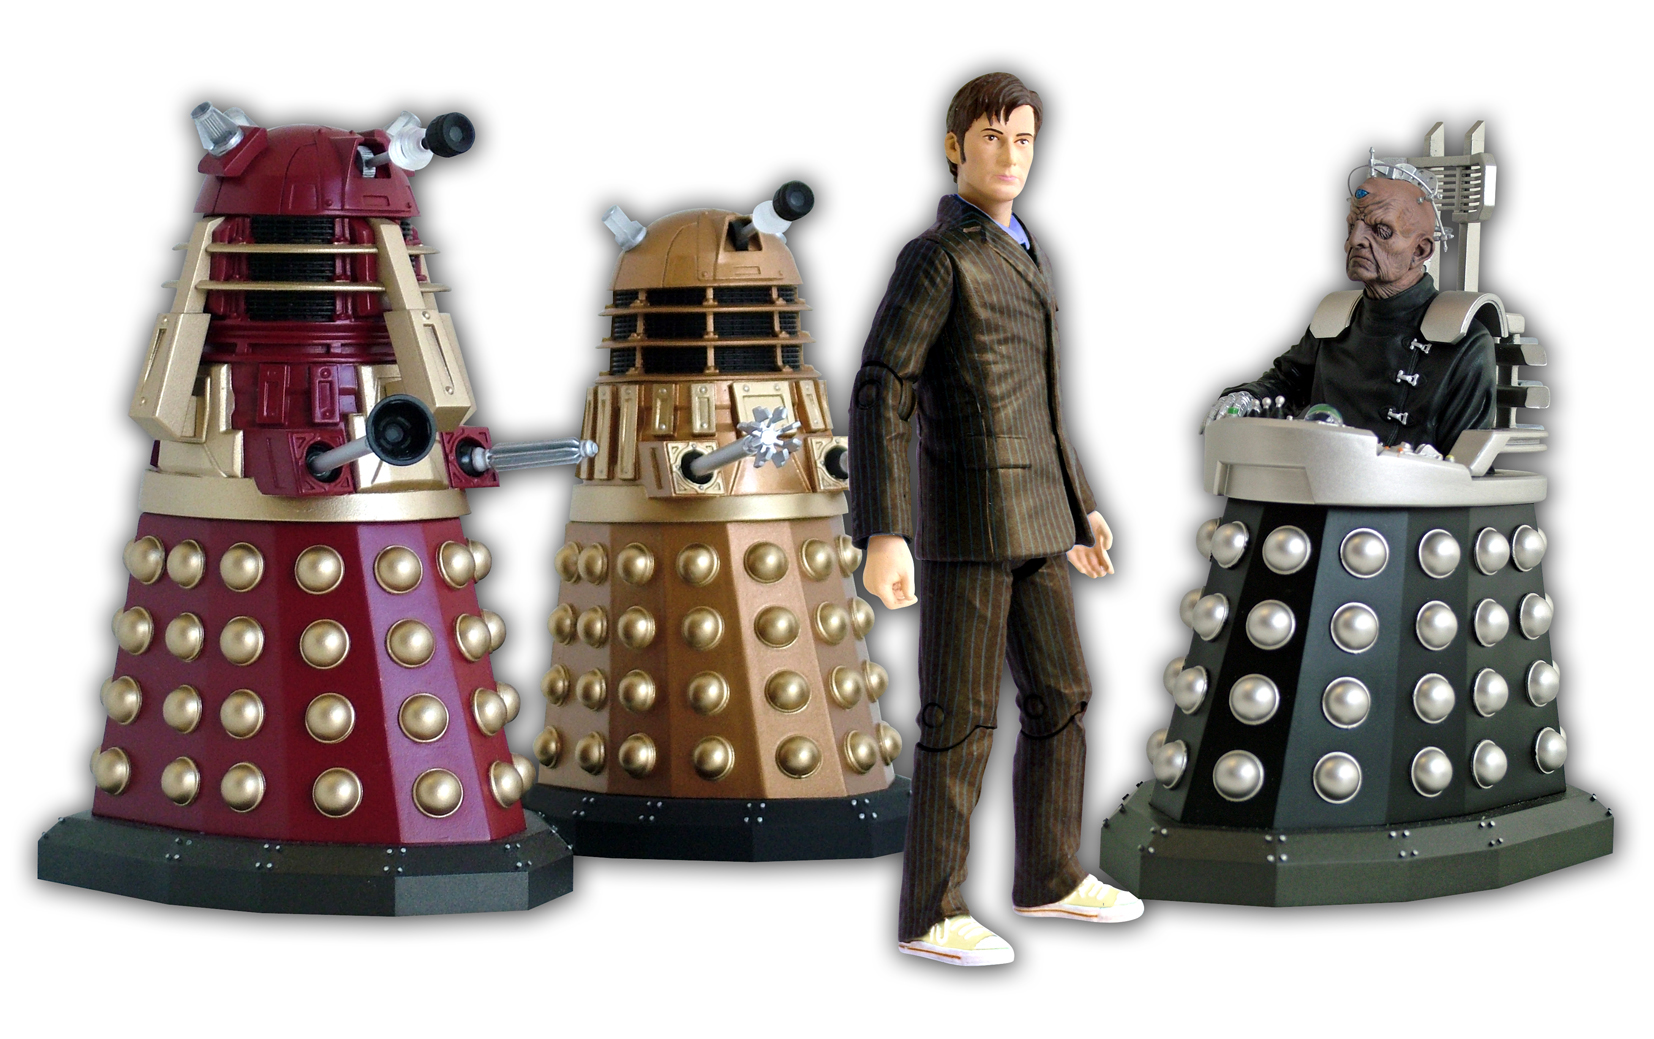 Dr Who Series 4 Episode 12/13 Dalek Set